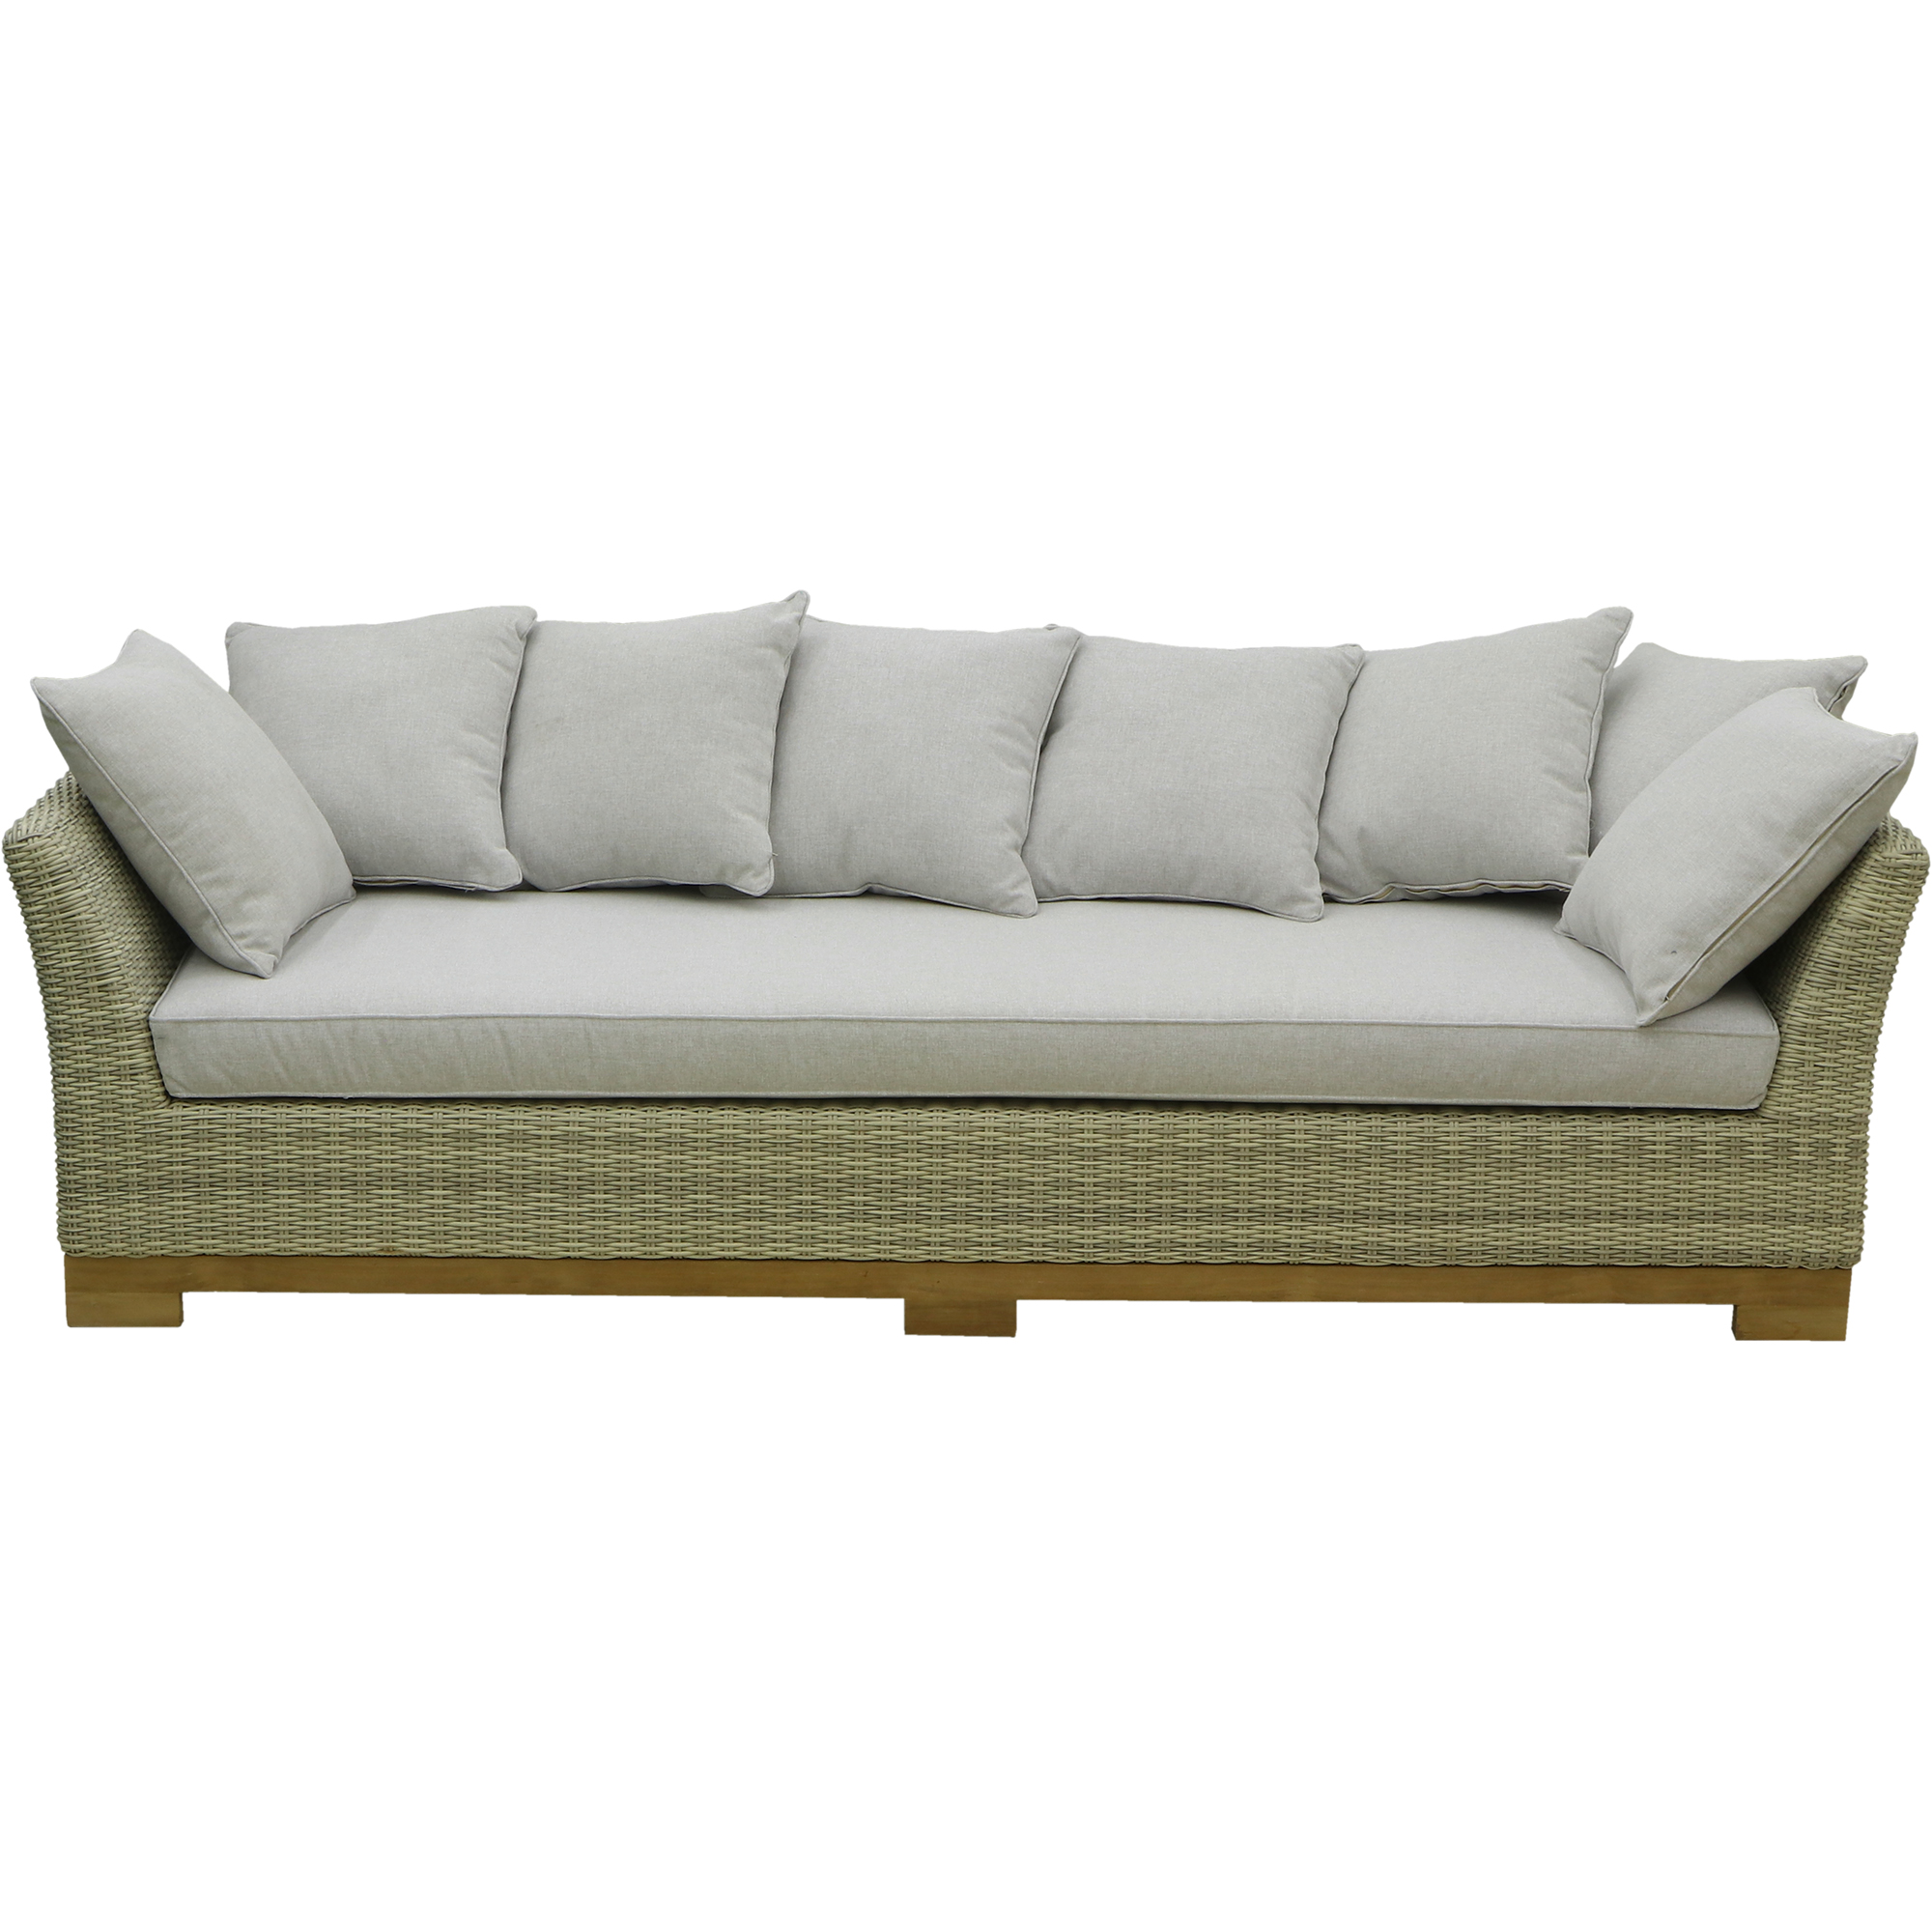 Комплект мебели с подушками Jepara 2 предмета, цвет светло-коричневый, размер 240х90х88 см - фото 3